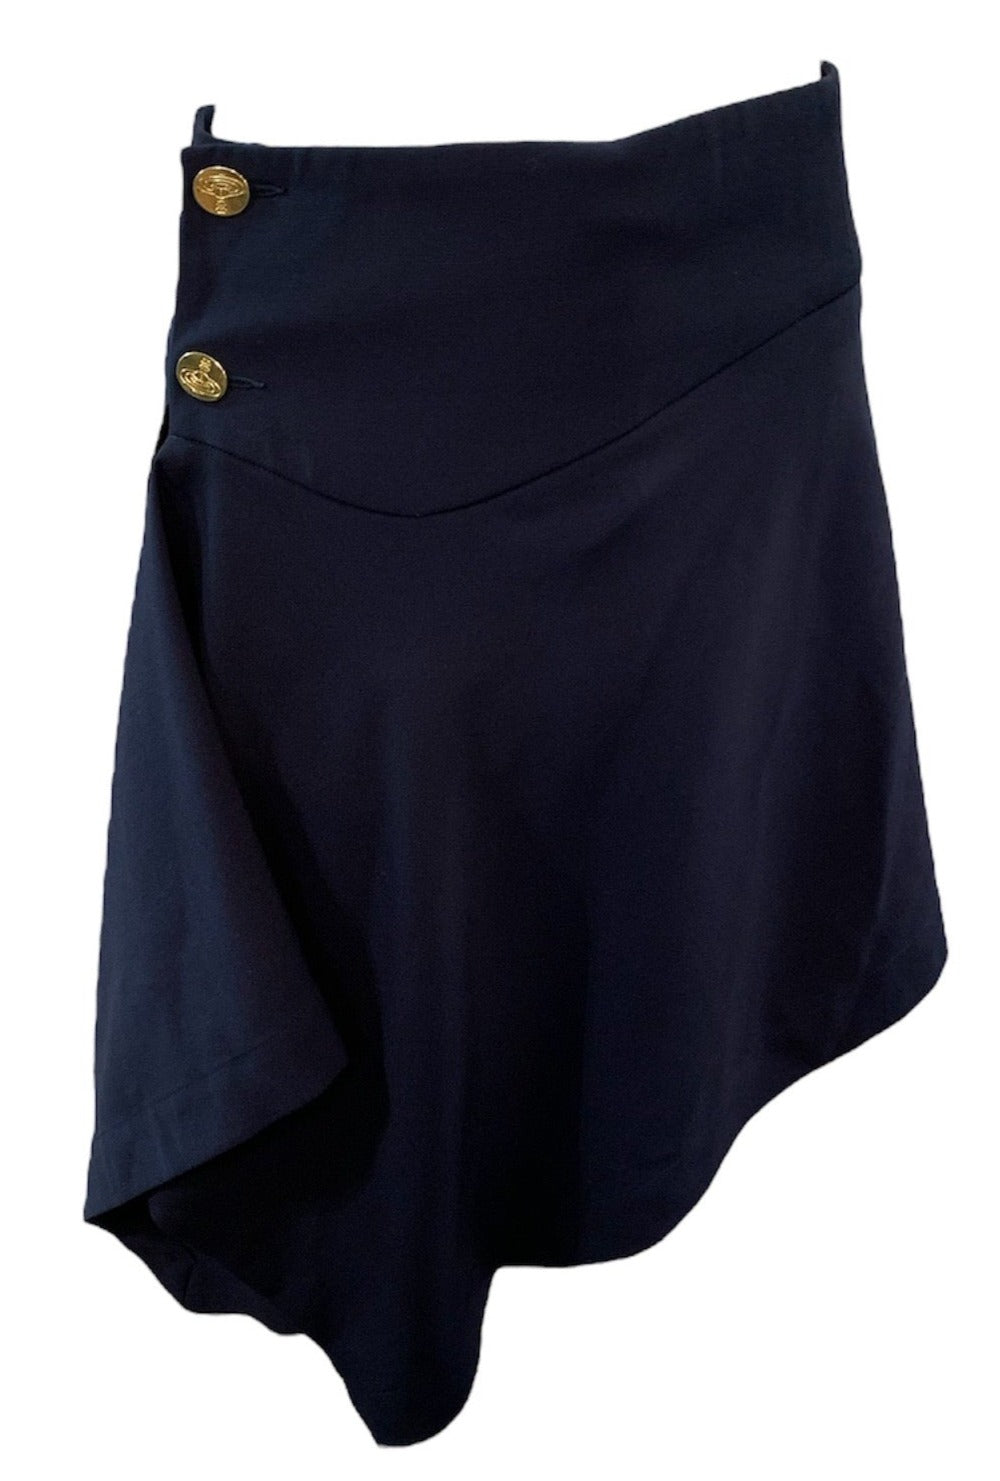 Vivienne Westwood 90s Blue Asymmetrical Wool Skirt FRONT 1 of 5